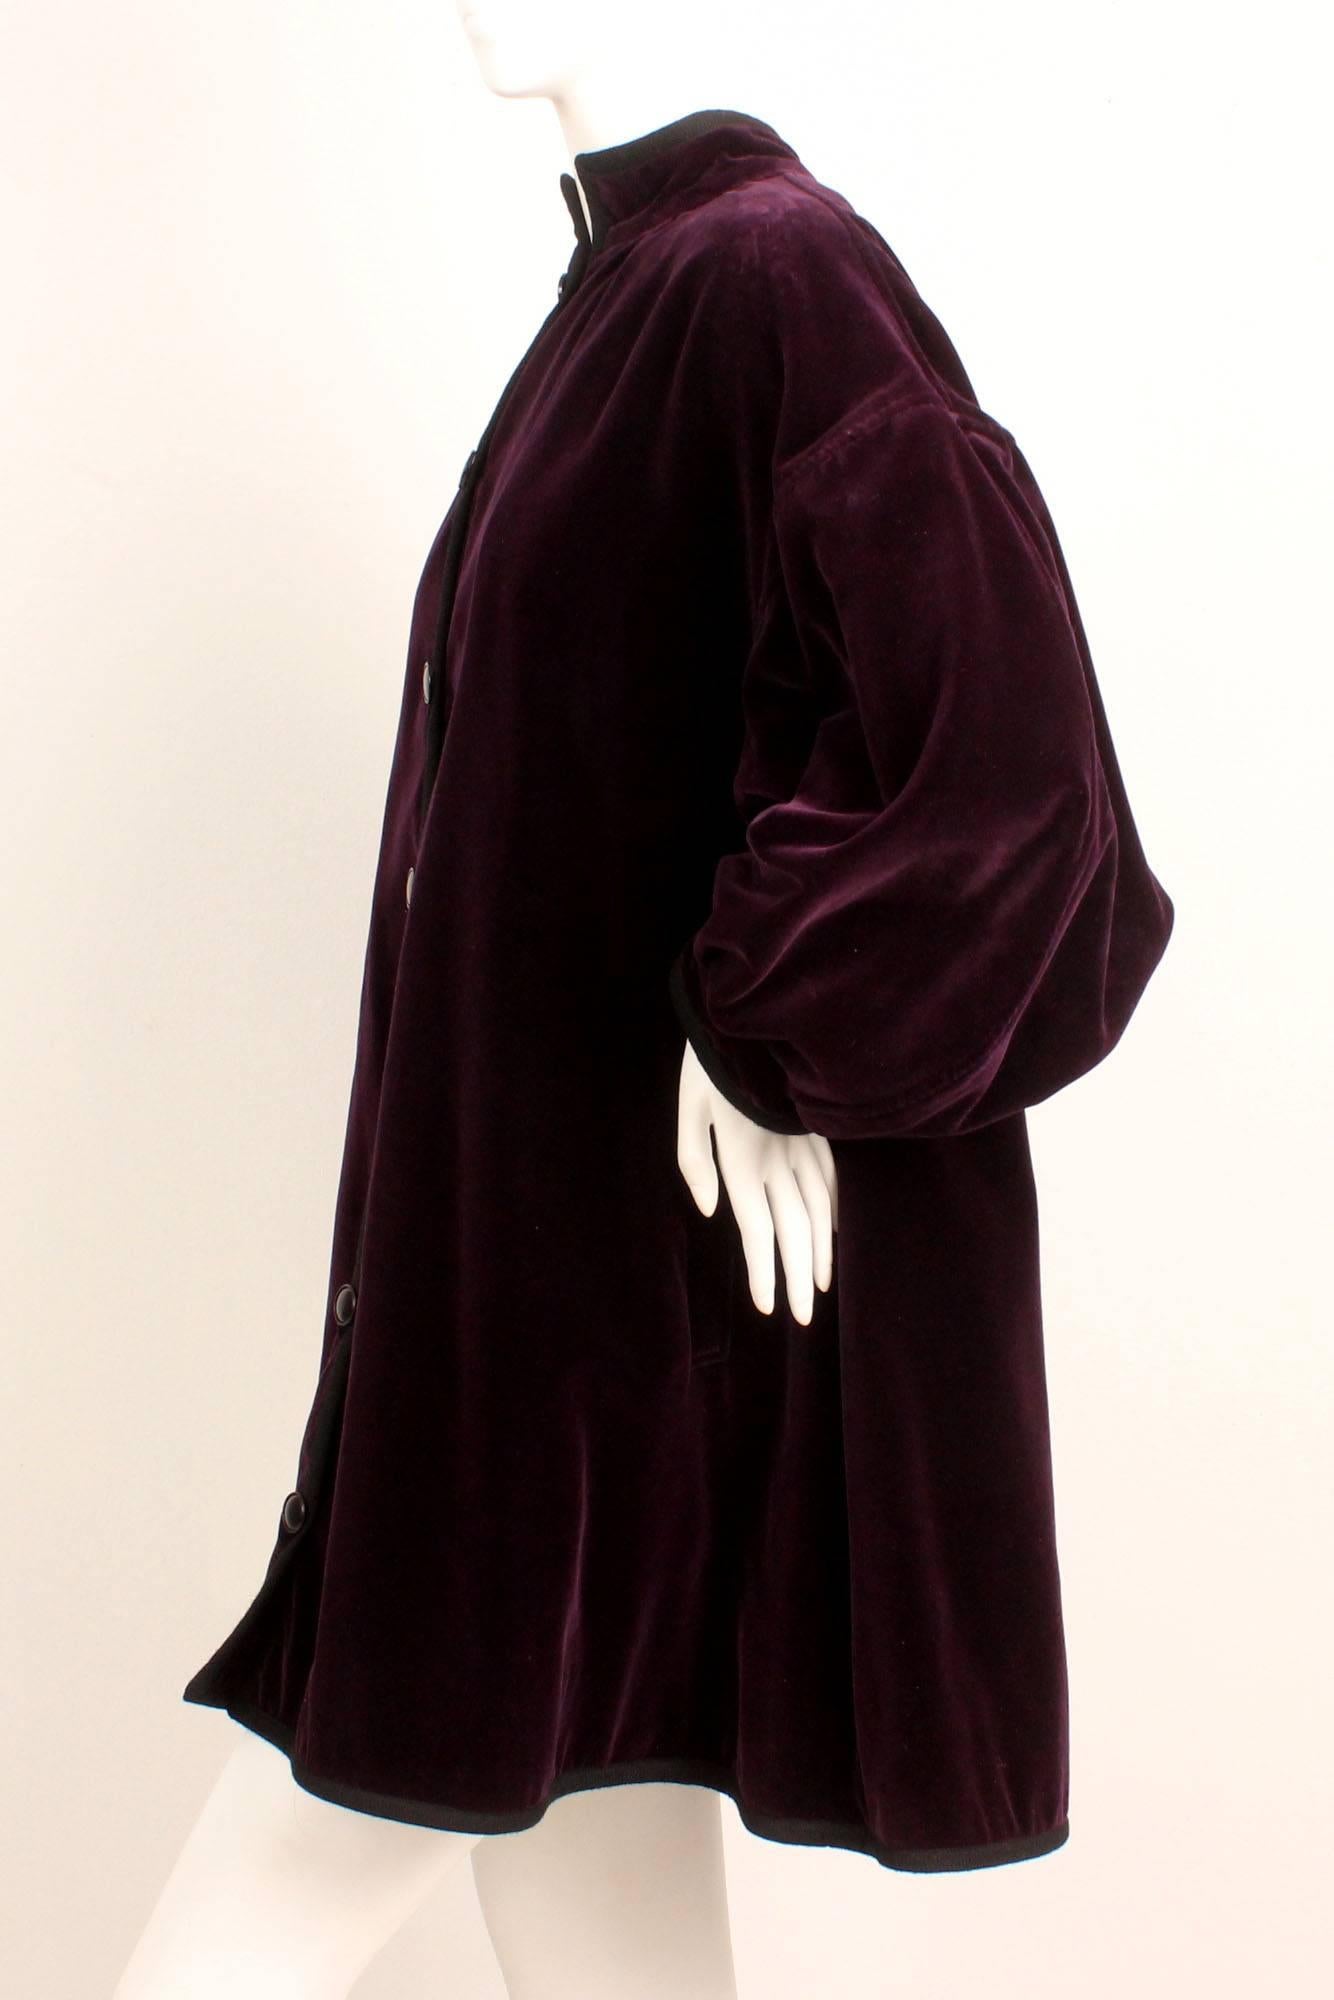 1977 Yves Saint Laurent Opulent Purple Velvet Topper In Excellent Condition For Sale In New York, NY